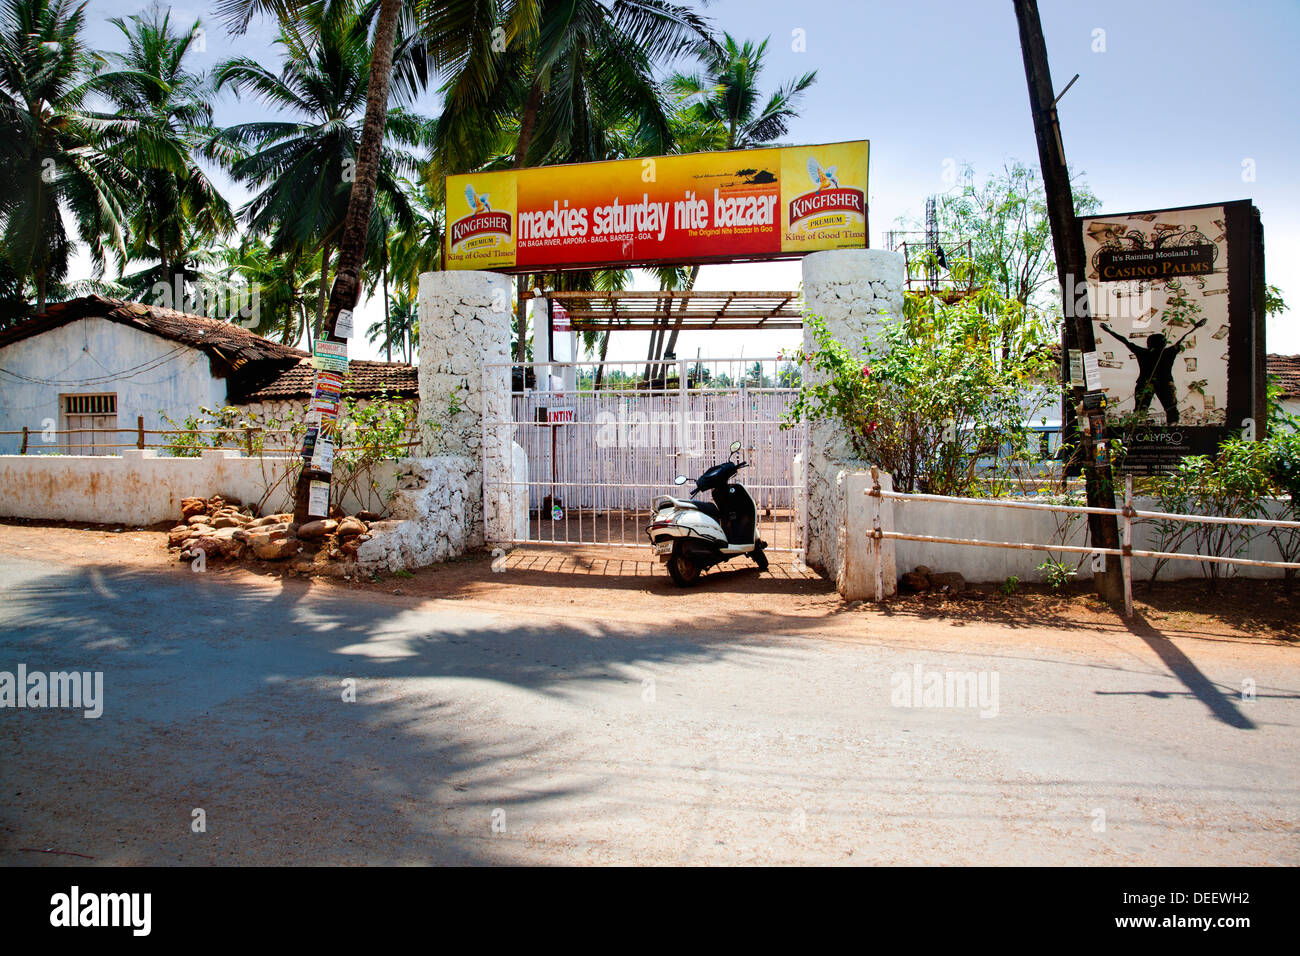 Entrance of a market, Mackies Saturday Nite Bazaar, Arpora Baga Road, Baga, Bardez, North Goa, Goa, India Stock Photo